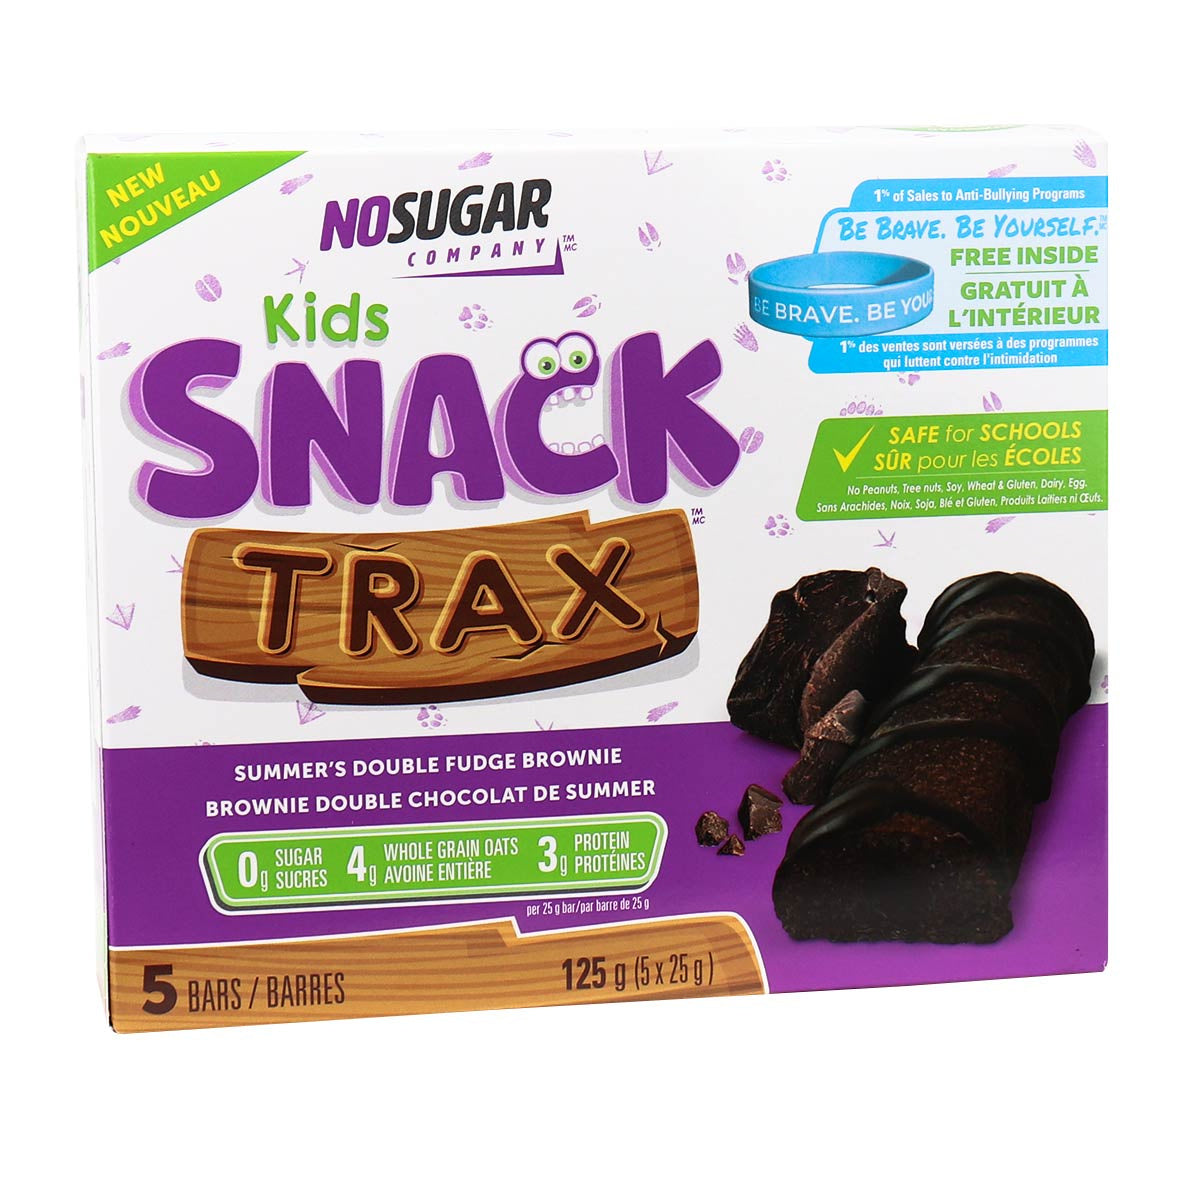 No Sugar Company Snack Trax 125g